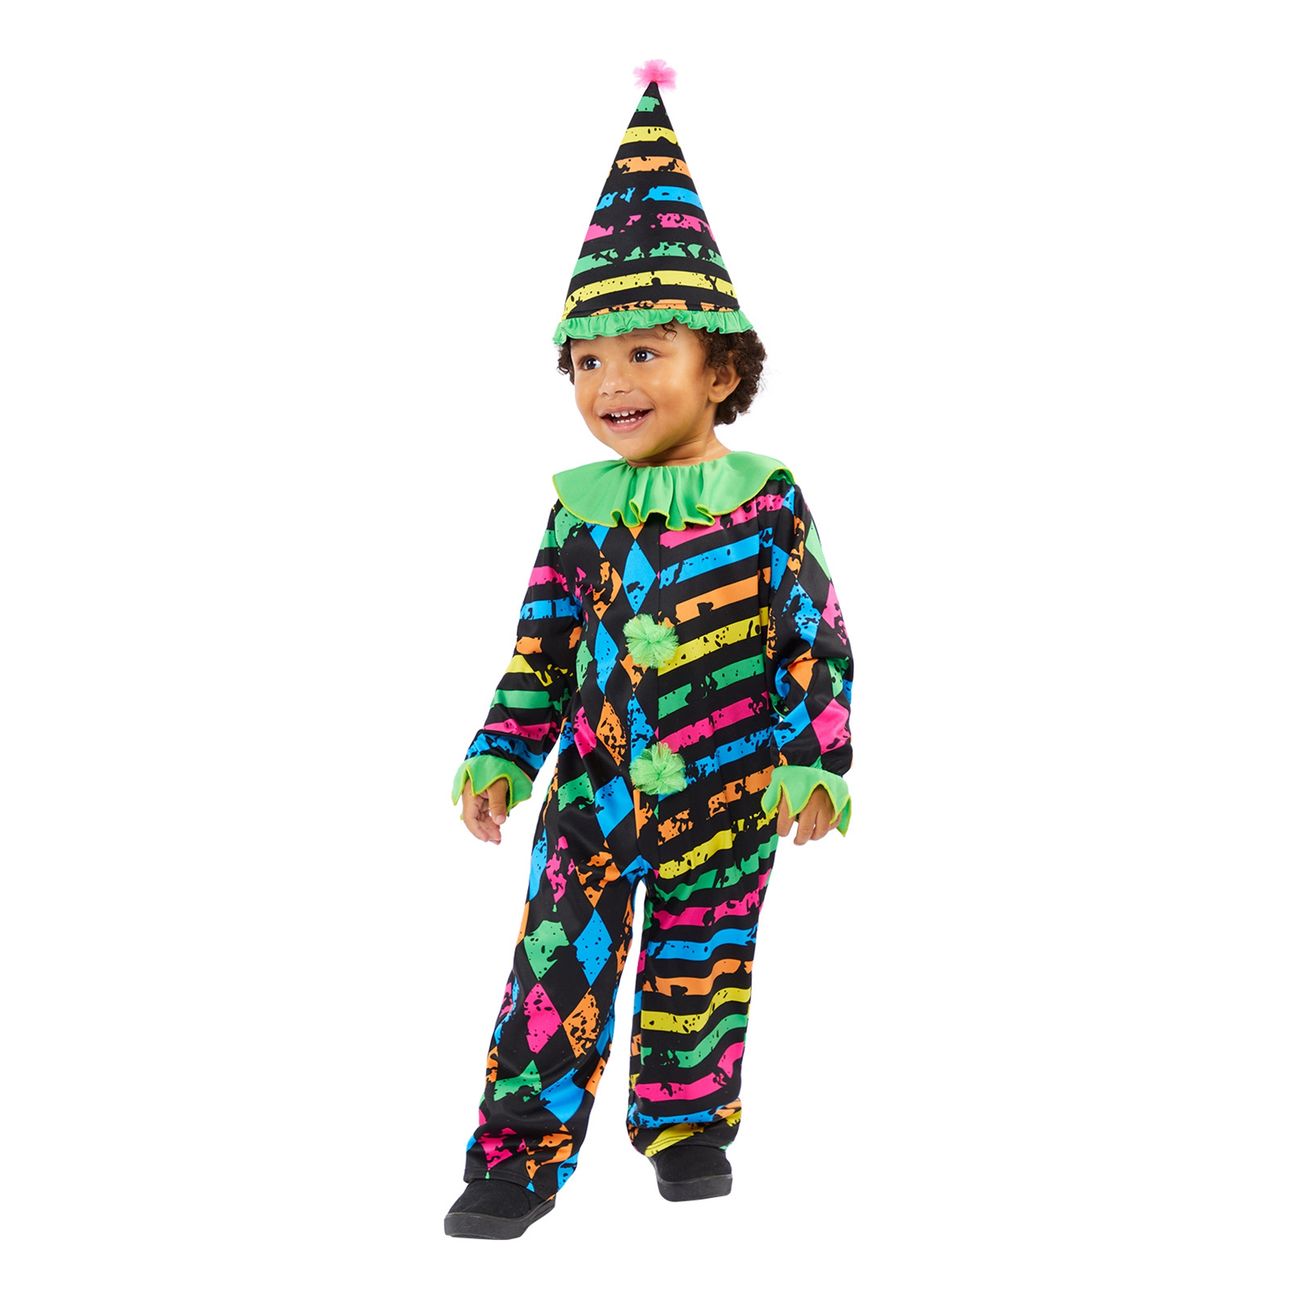 neon-clown-bebis-maskeraddrakt-s-98395-1